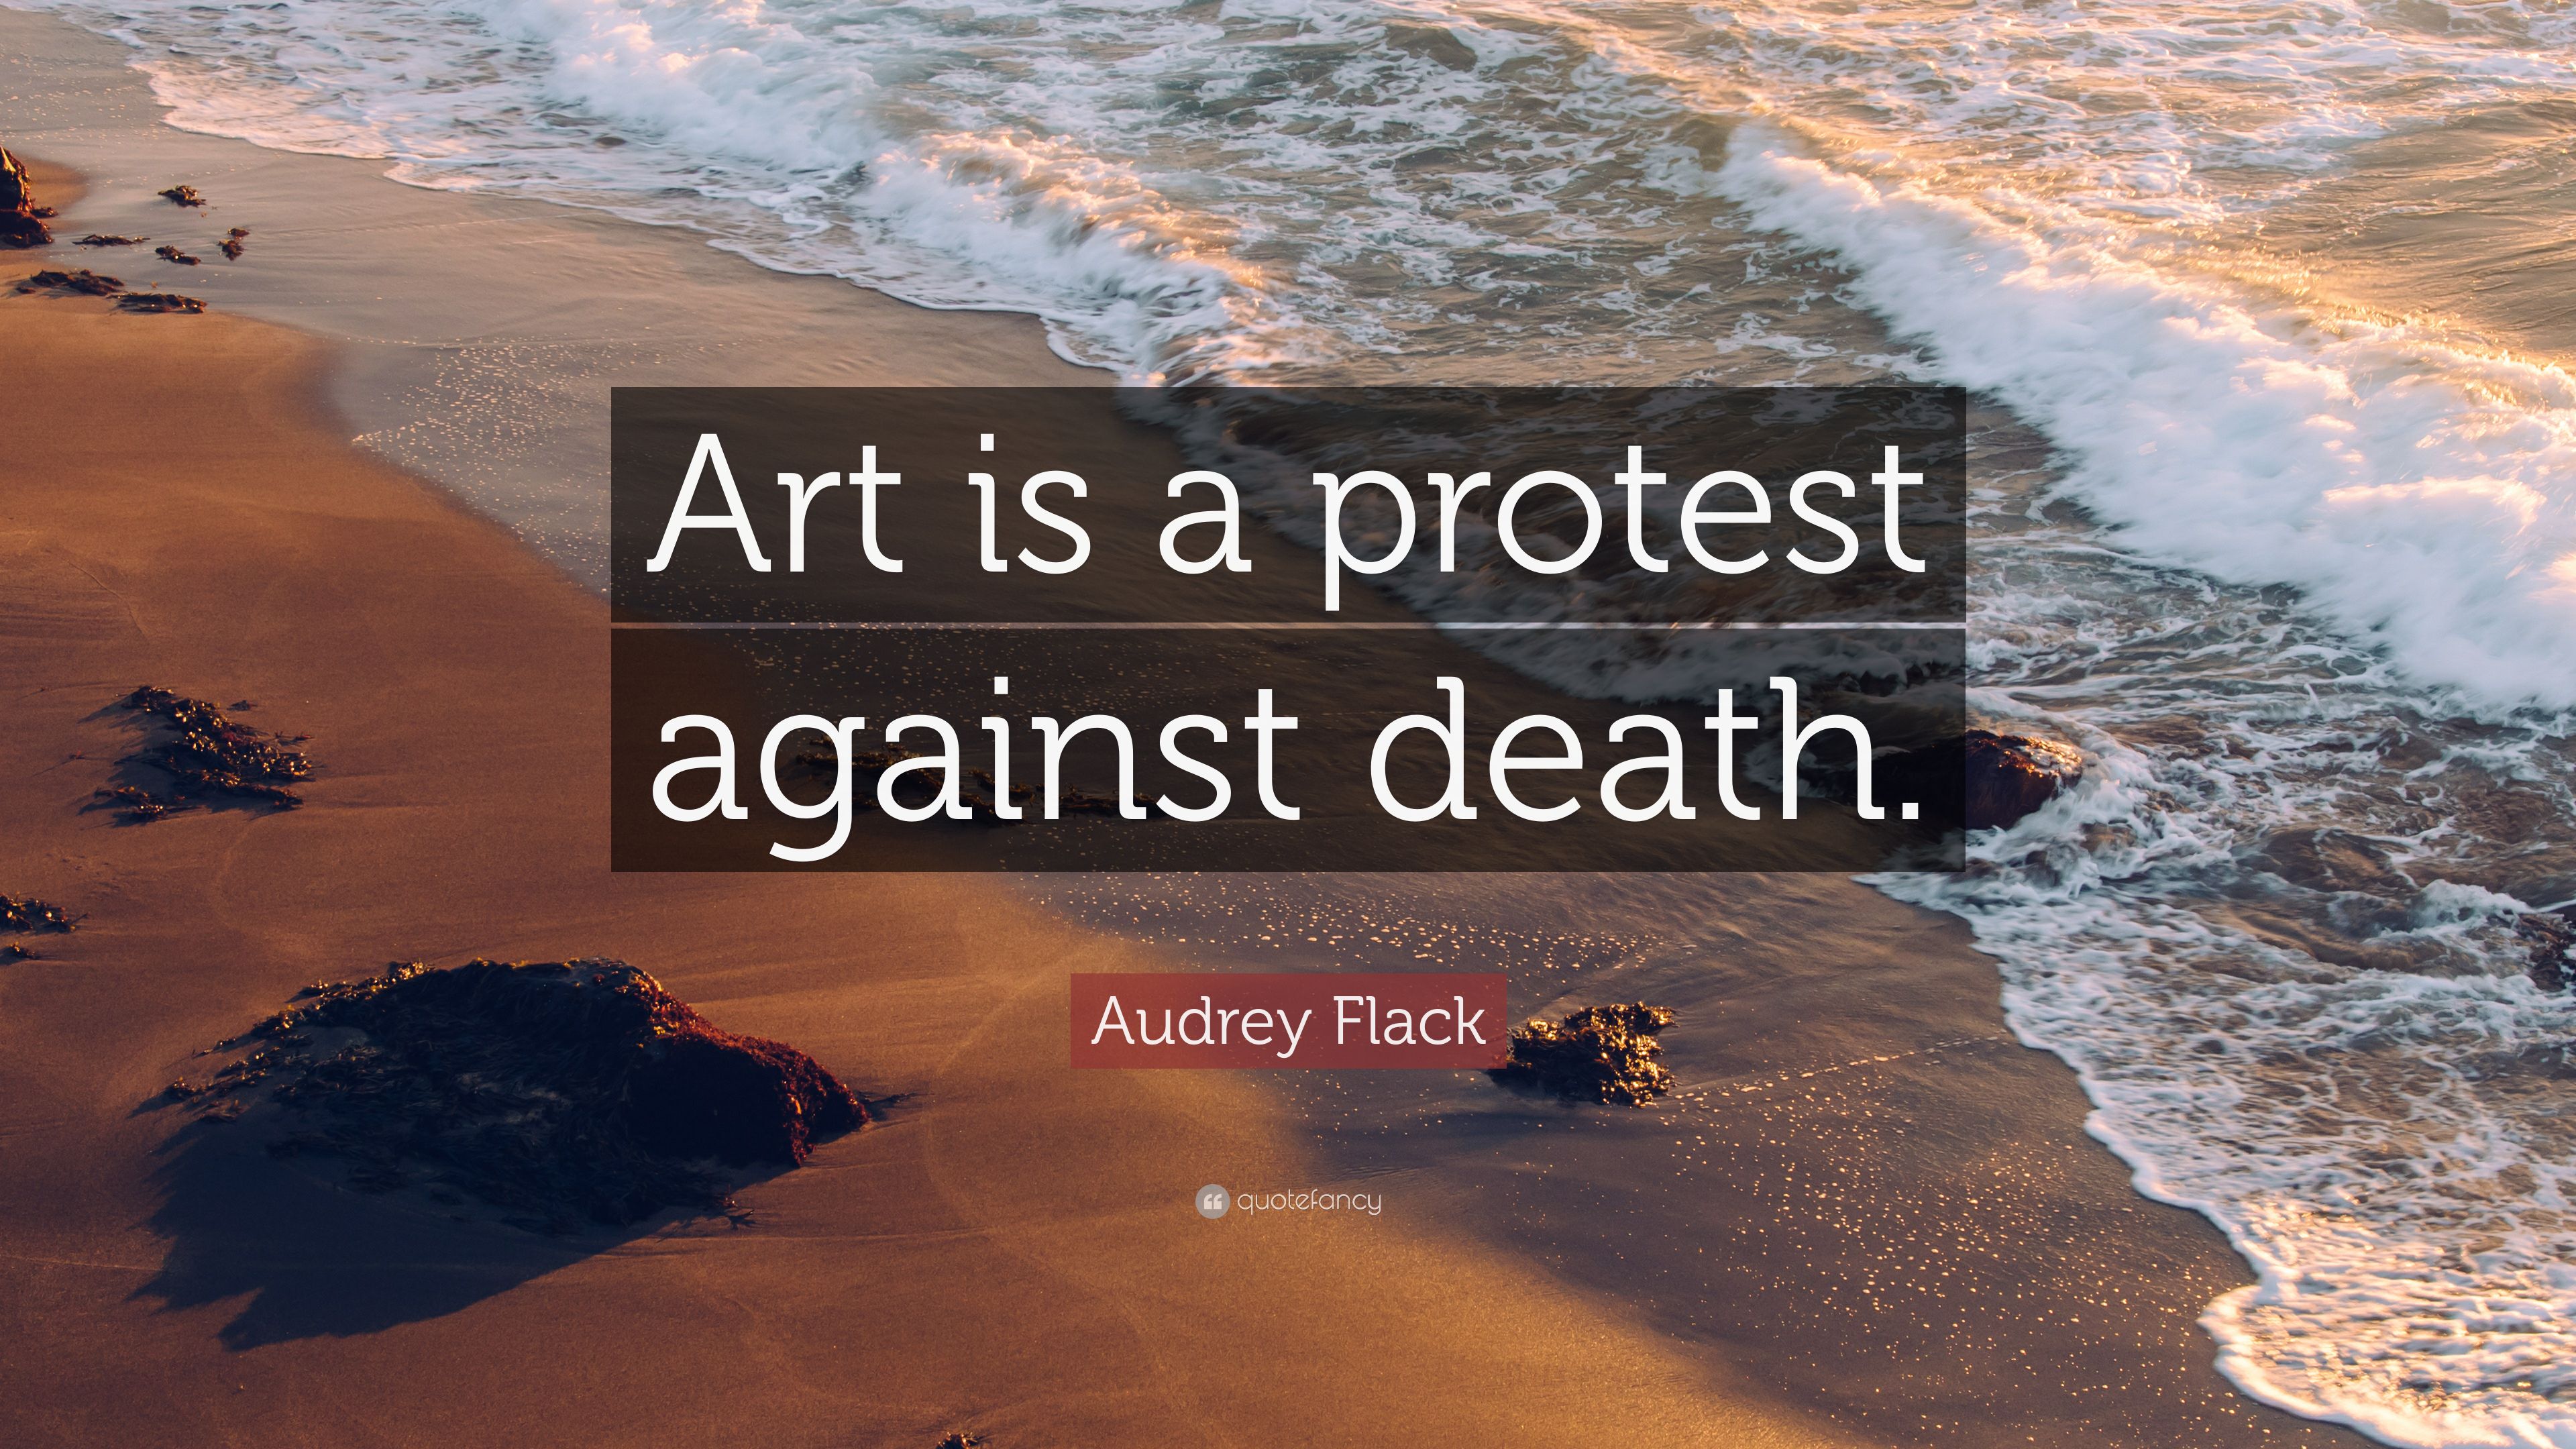 Audrey Flack Quote: “Art is a protest against death.” 7 wallpaper